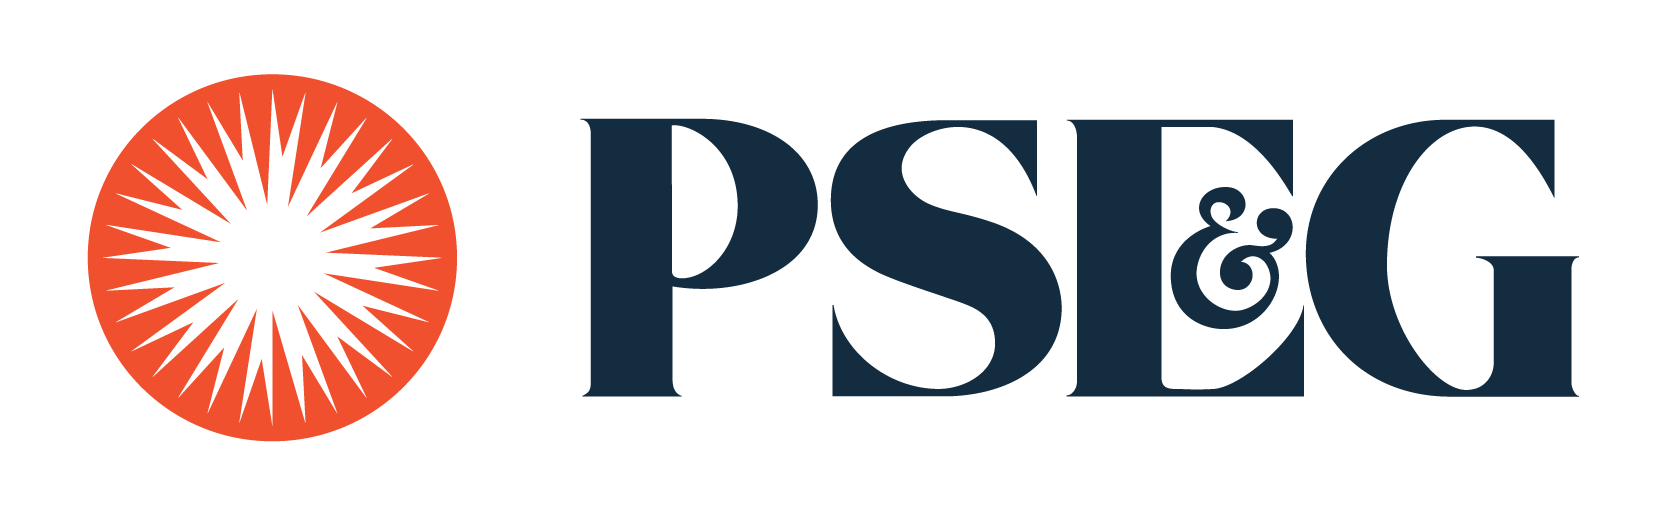 PSEG NJ Public icon